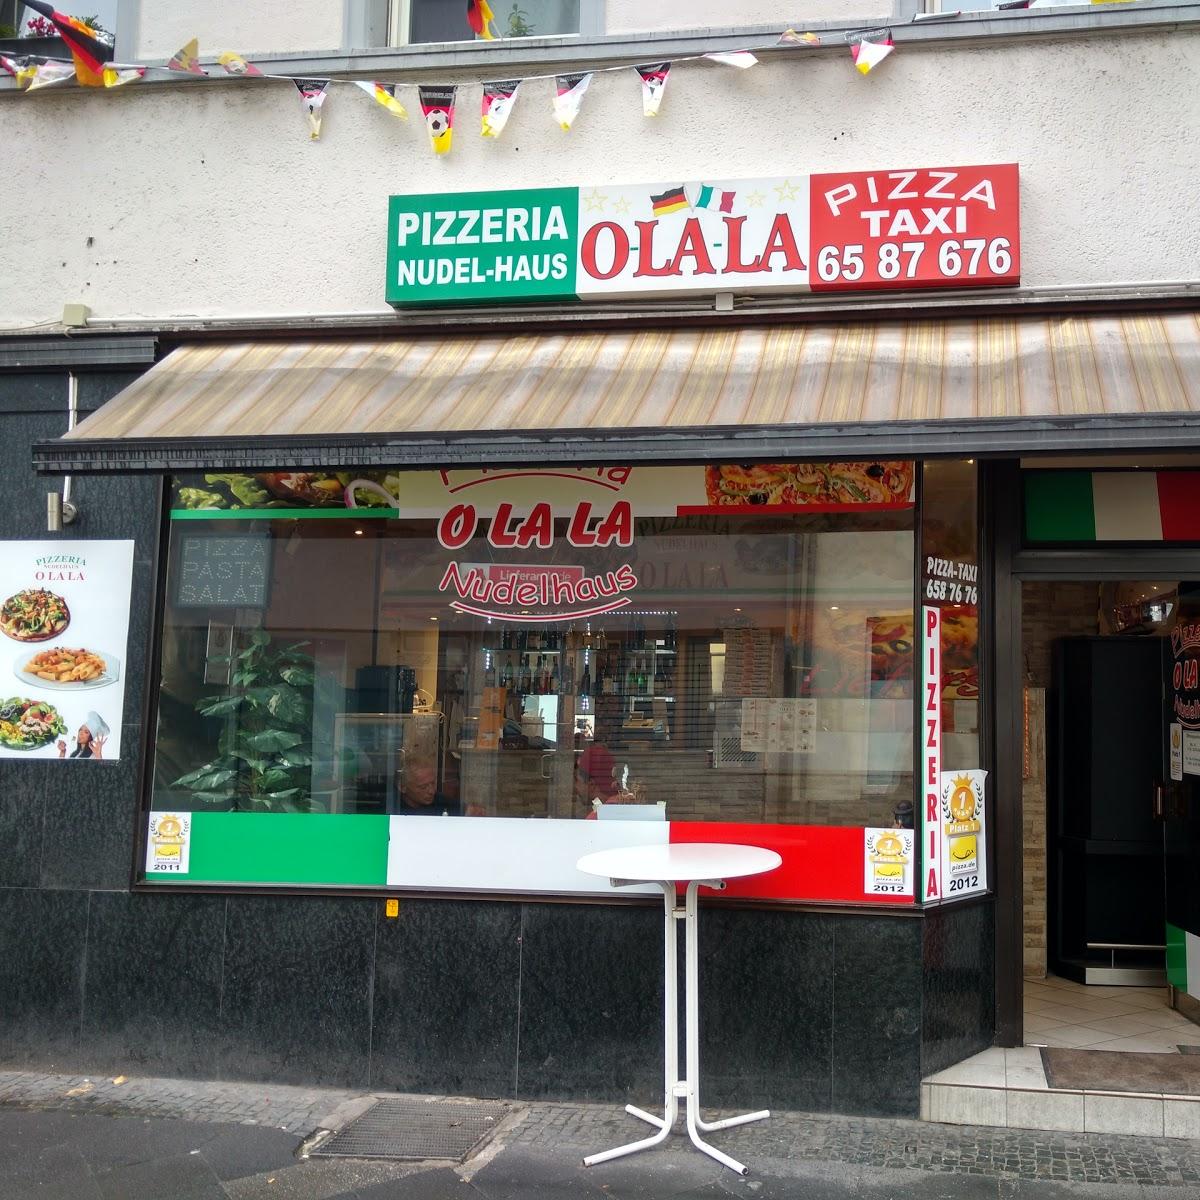 Restaurant "Pizzeria O La La" in Krefeld